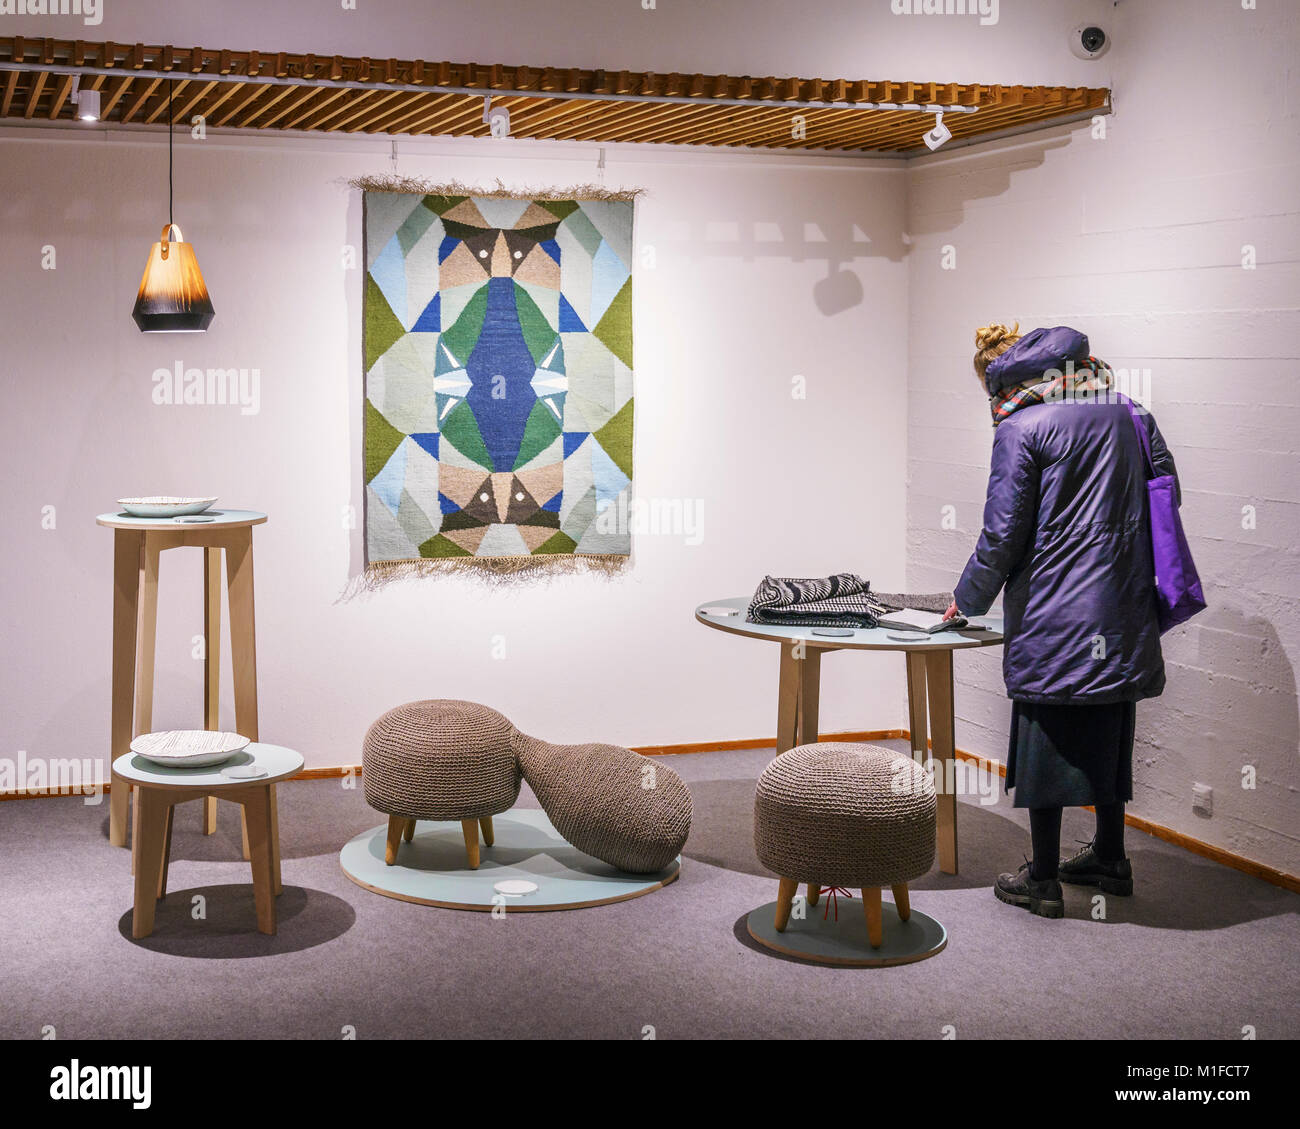 Design Show, The Nordic House, Reykjavik, Iceland Stock Photo